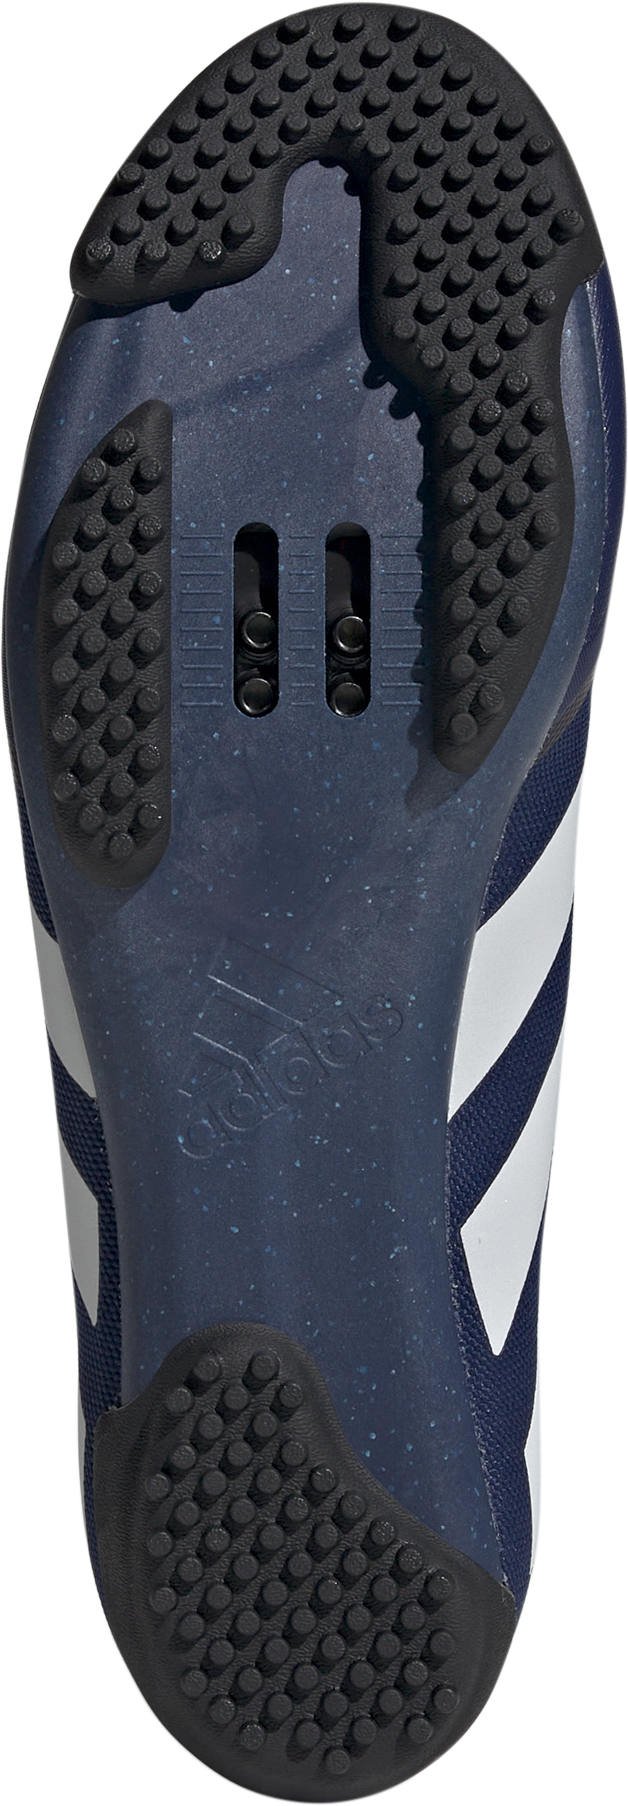 Adidas The Gravel Shoe 2.0